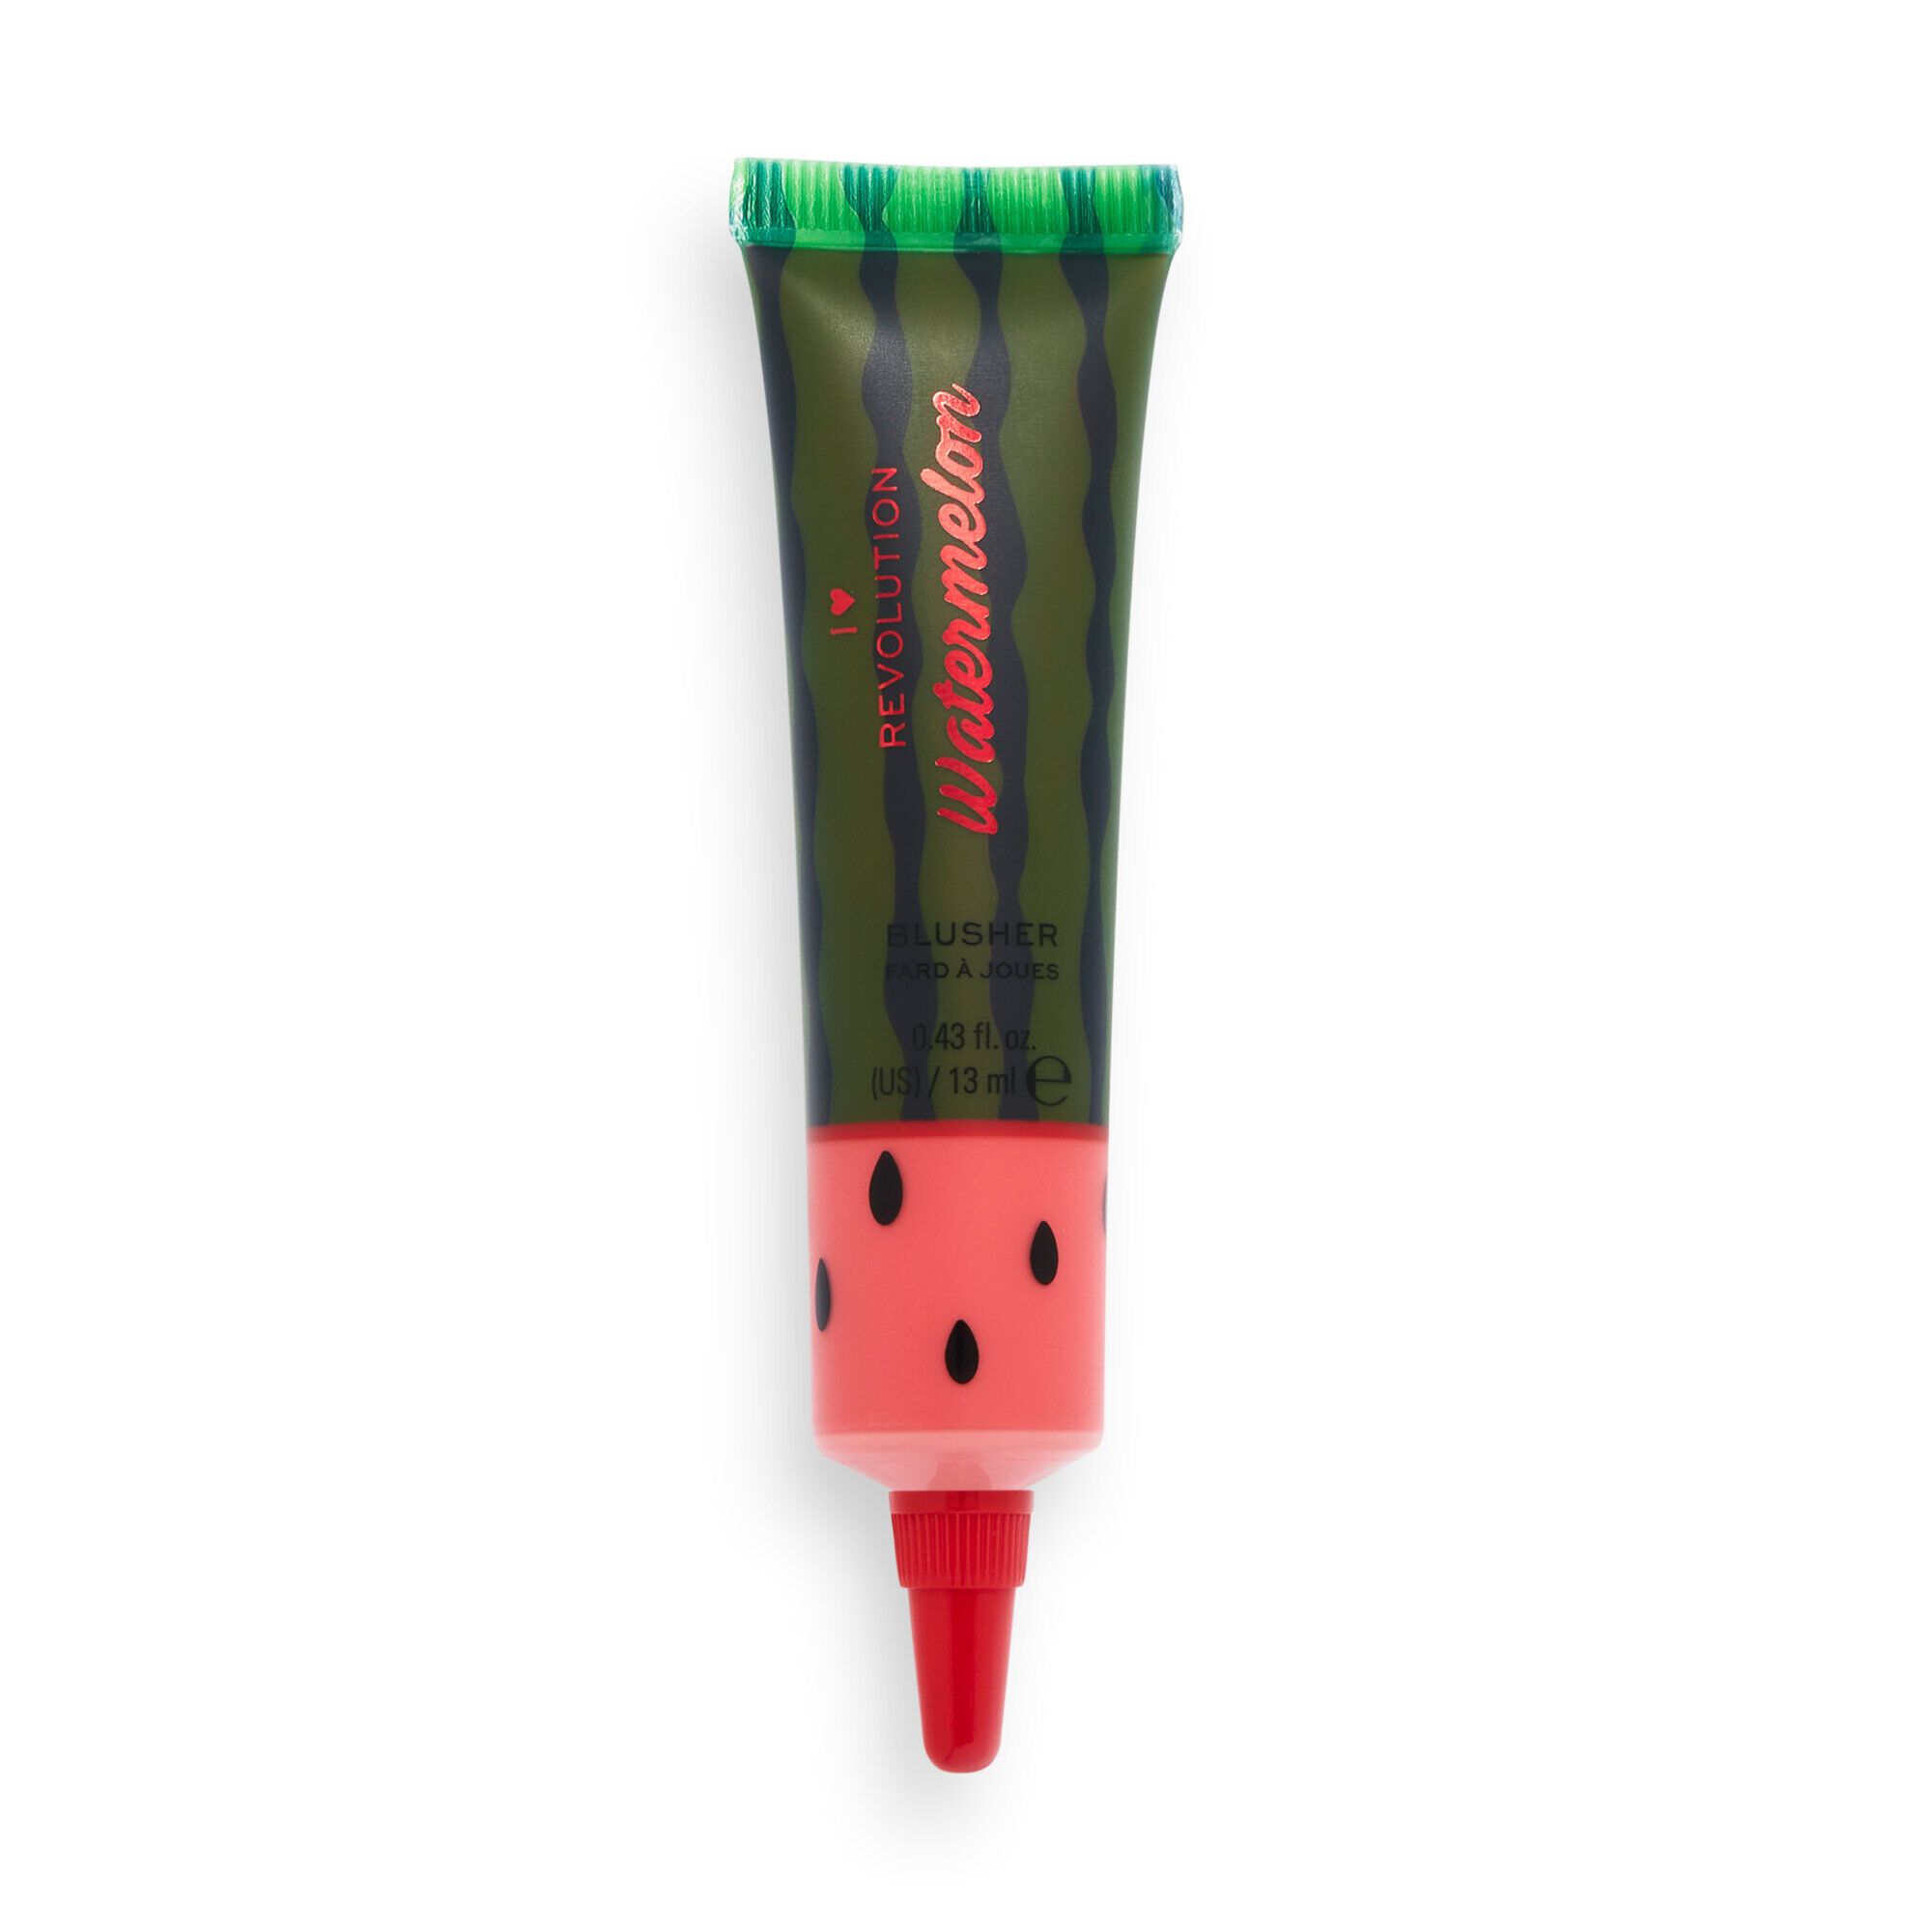 Watermelon Dewy Blusher Tint